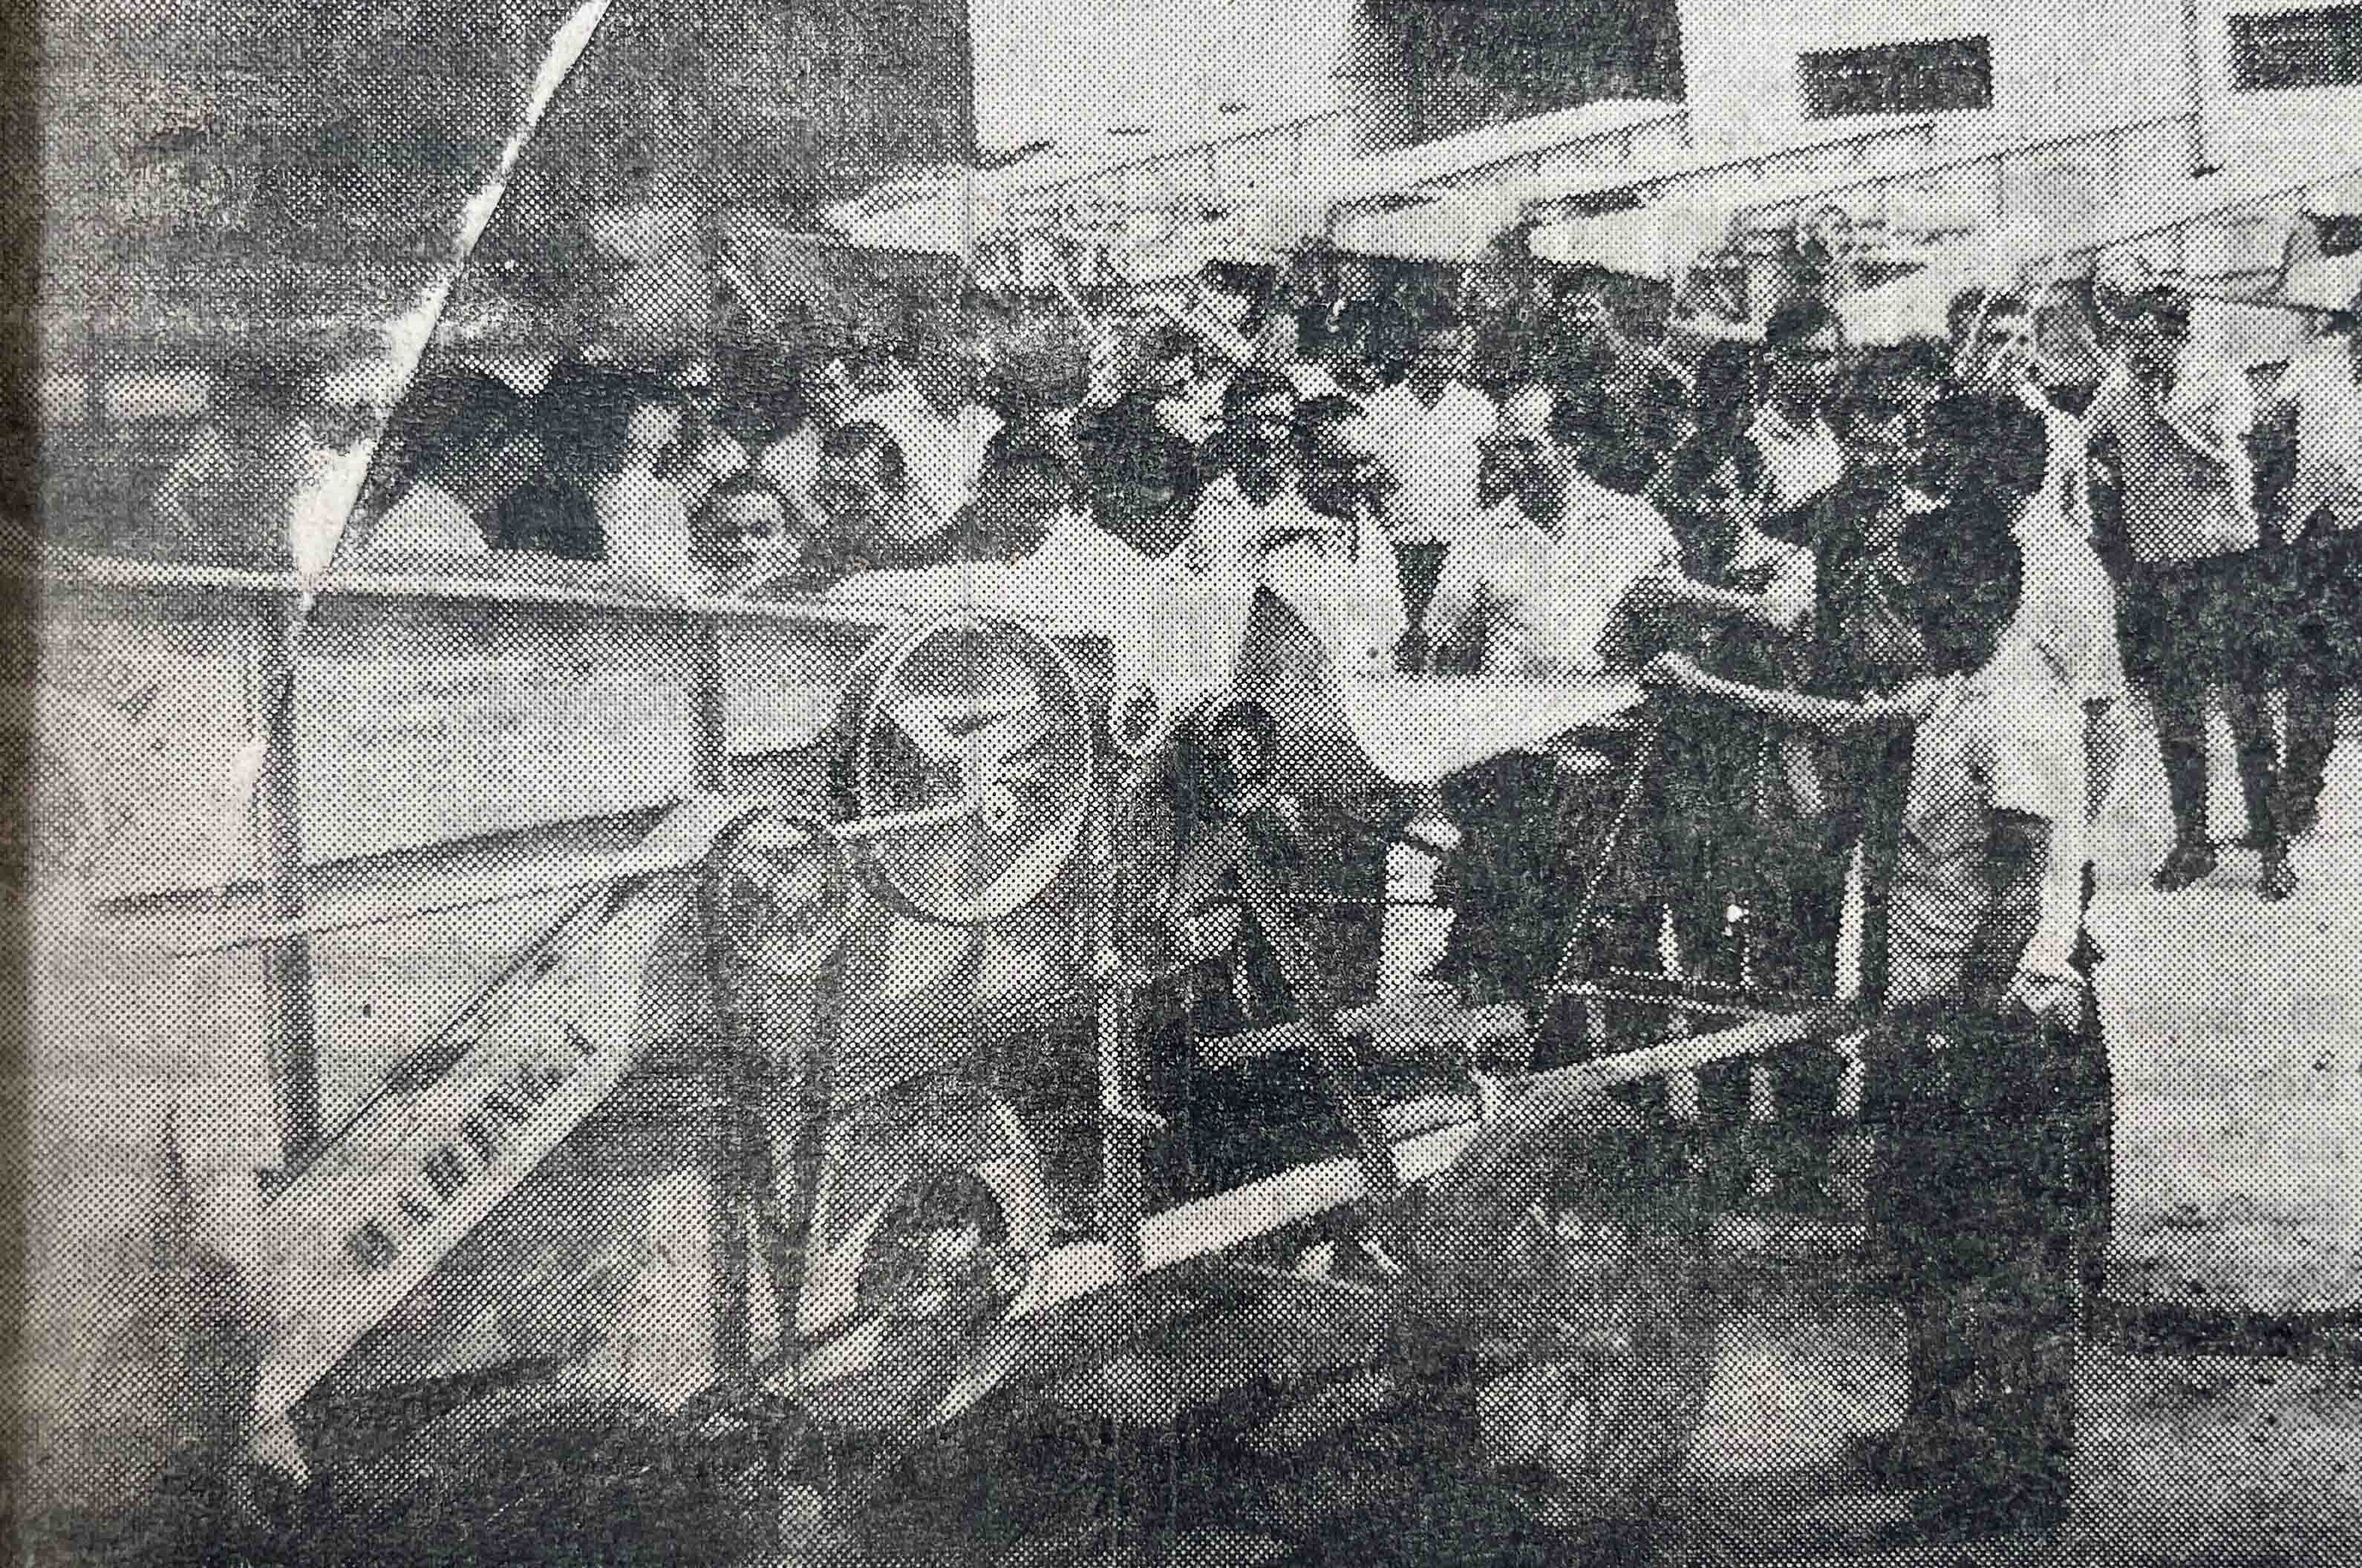 Trilhadeira Maringá - 1967